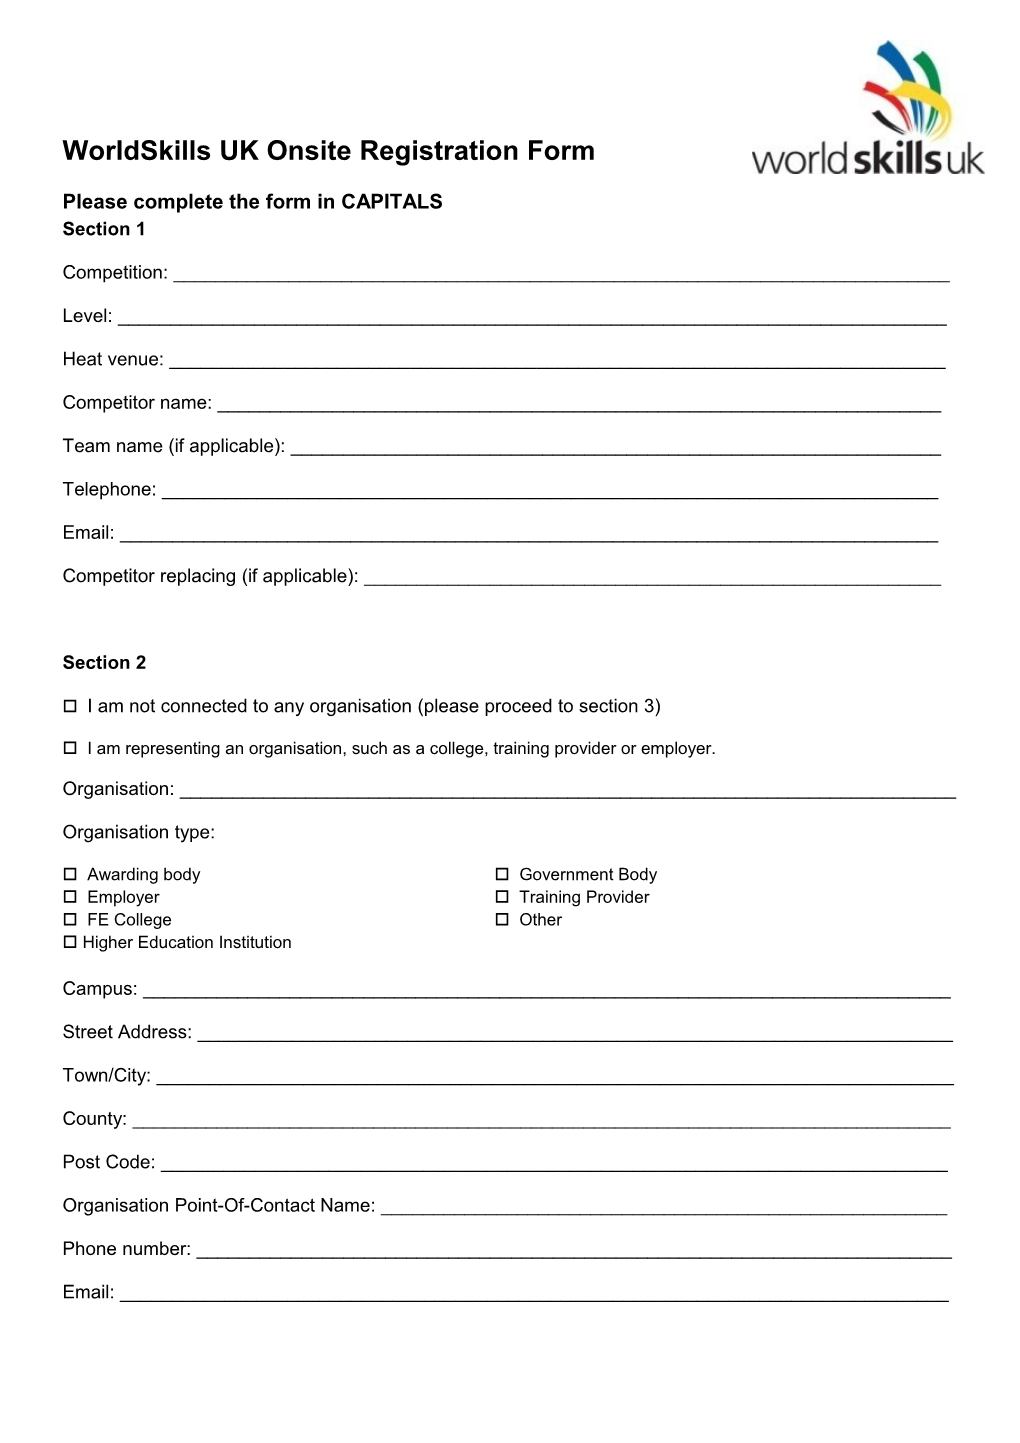 Worldskills UK Onsite Registration Form